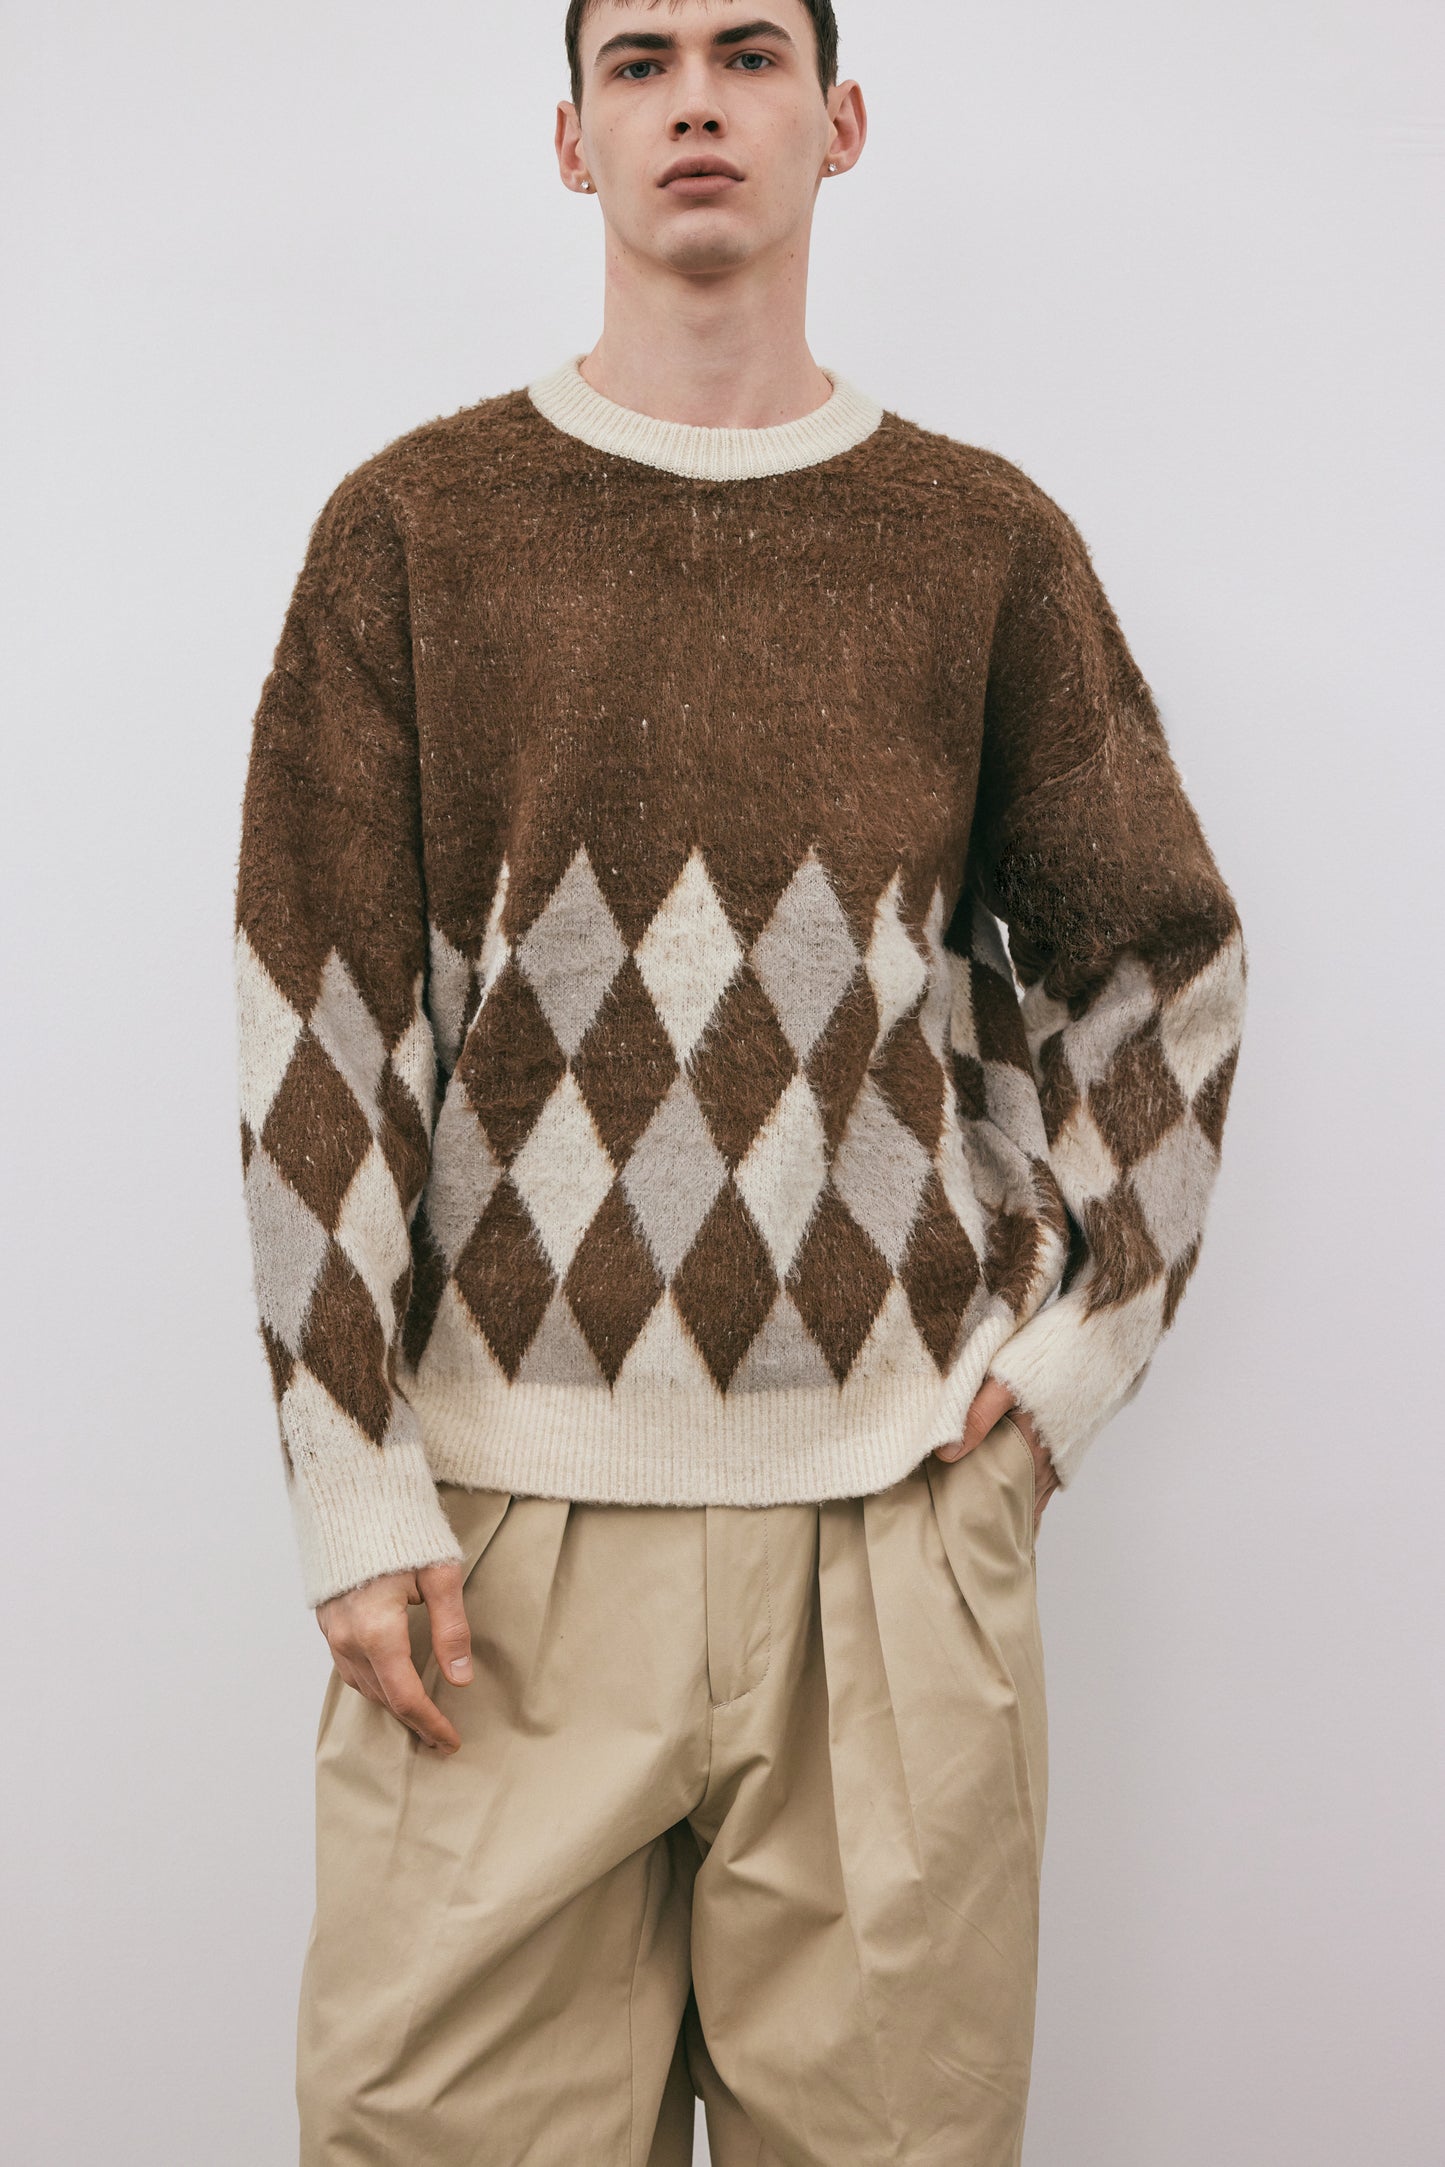 Grunge Hairy Pullover Sweater, Java Argyle